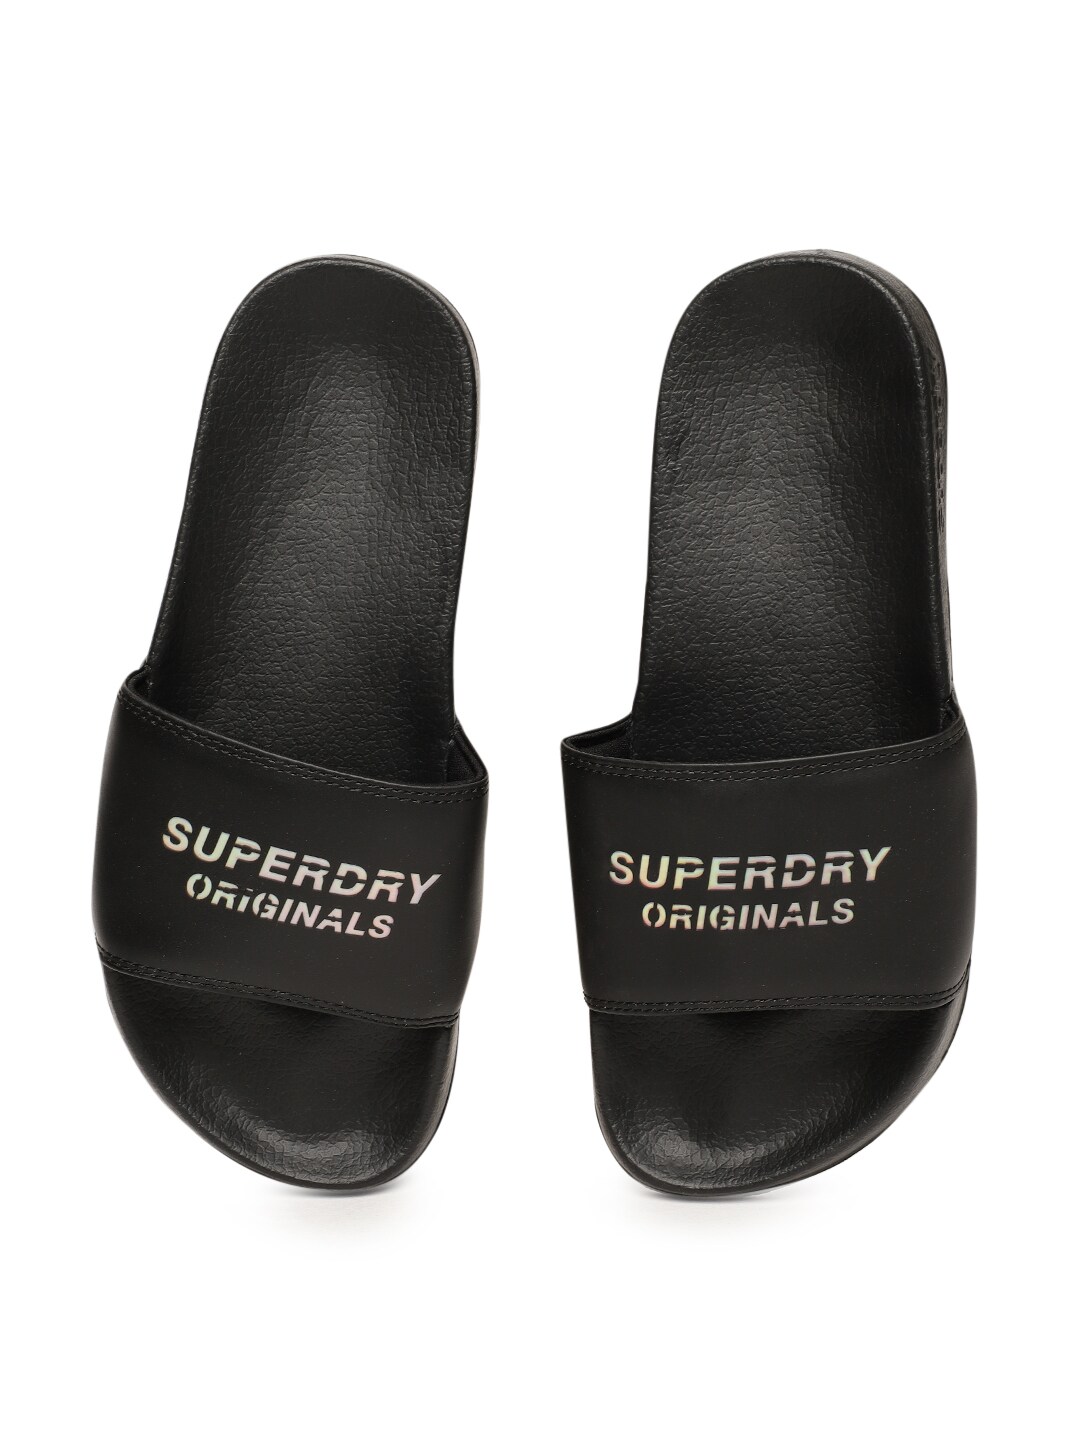 Superdry Women Black Solid Sliders Price in India